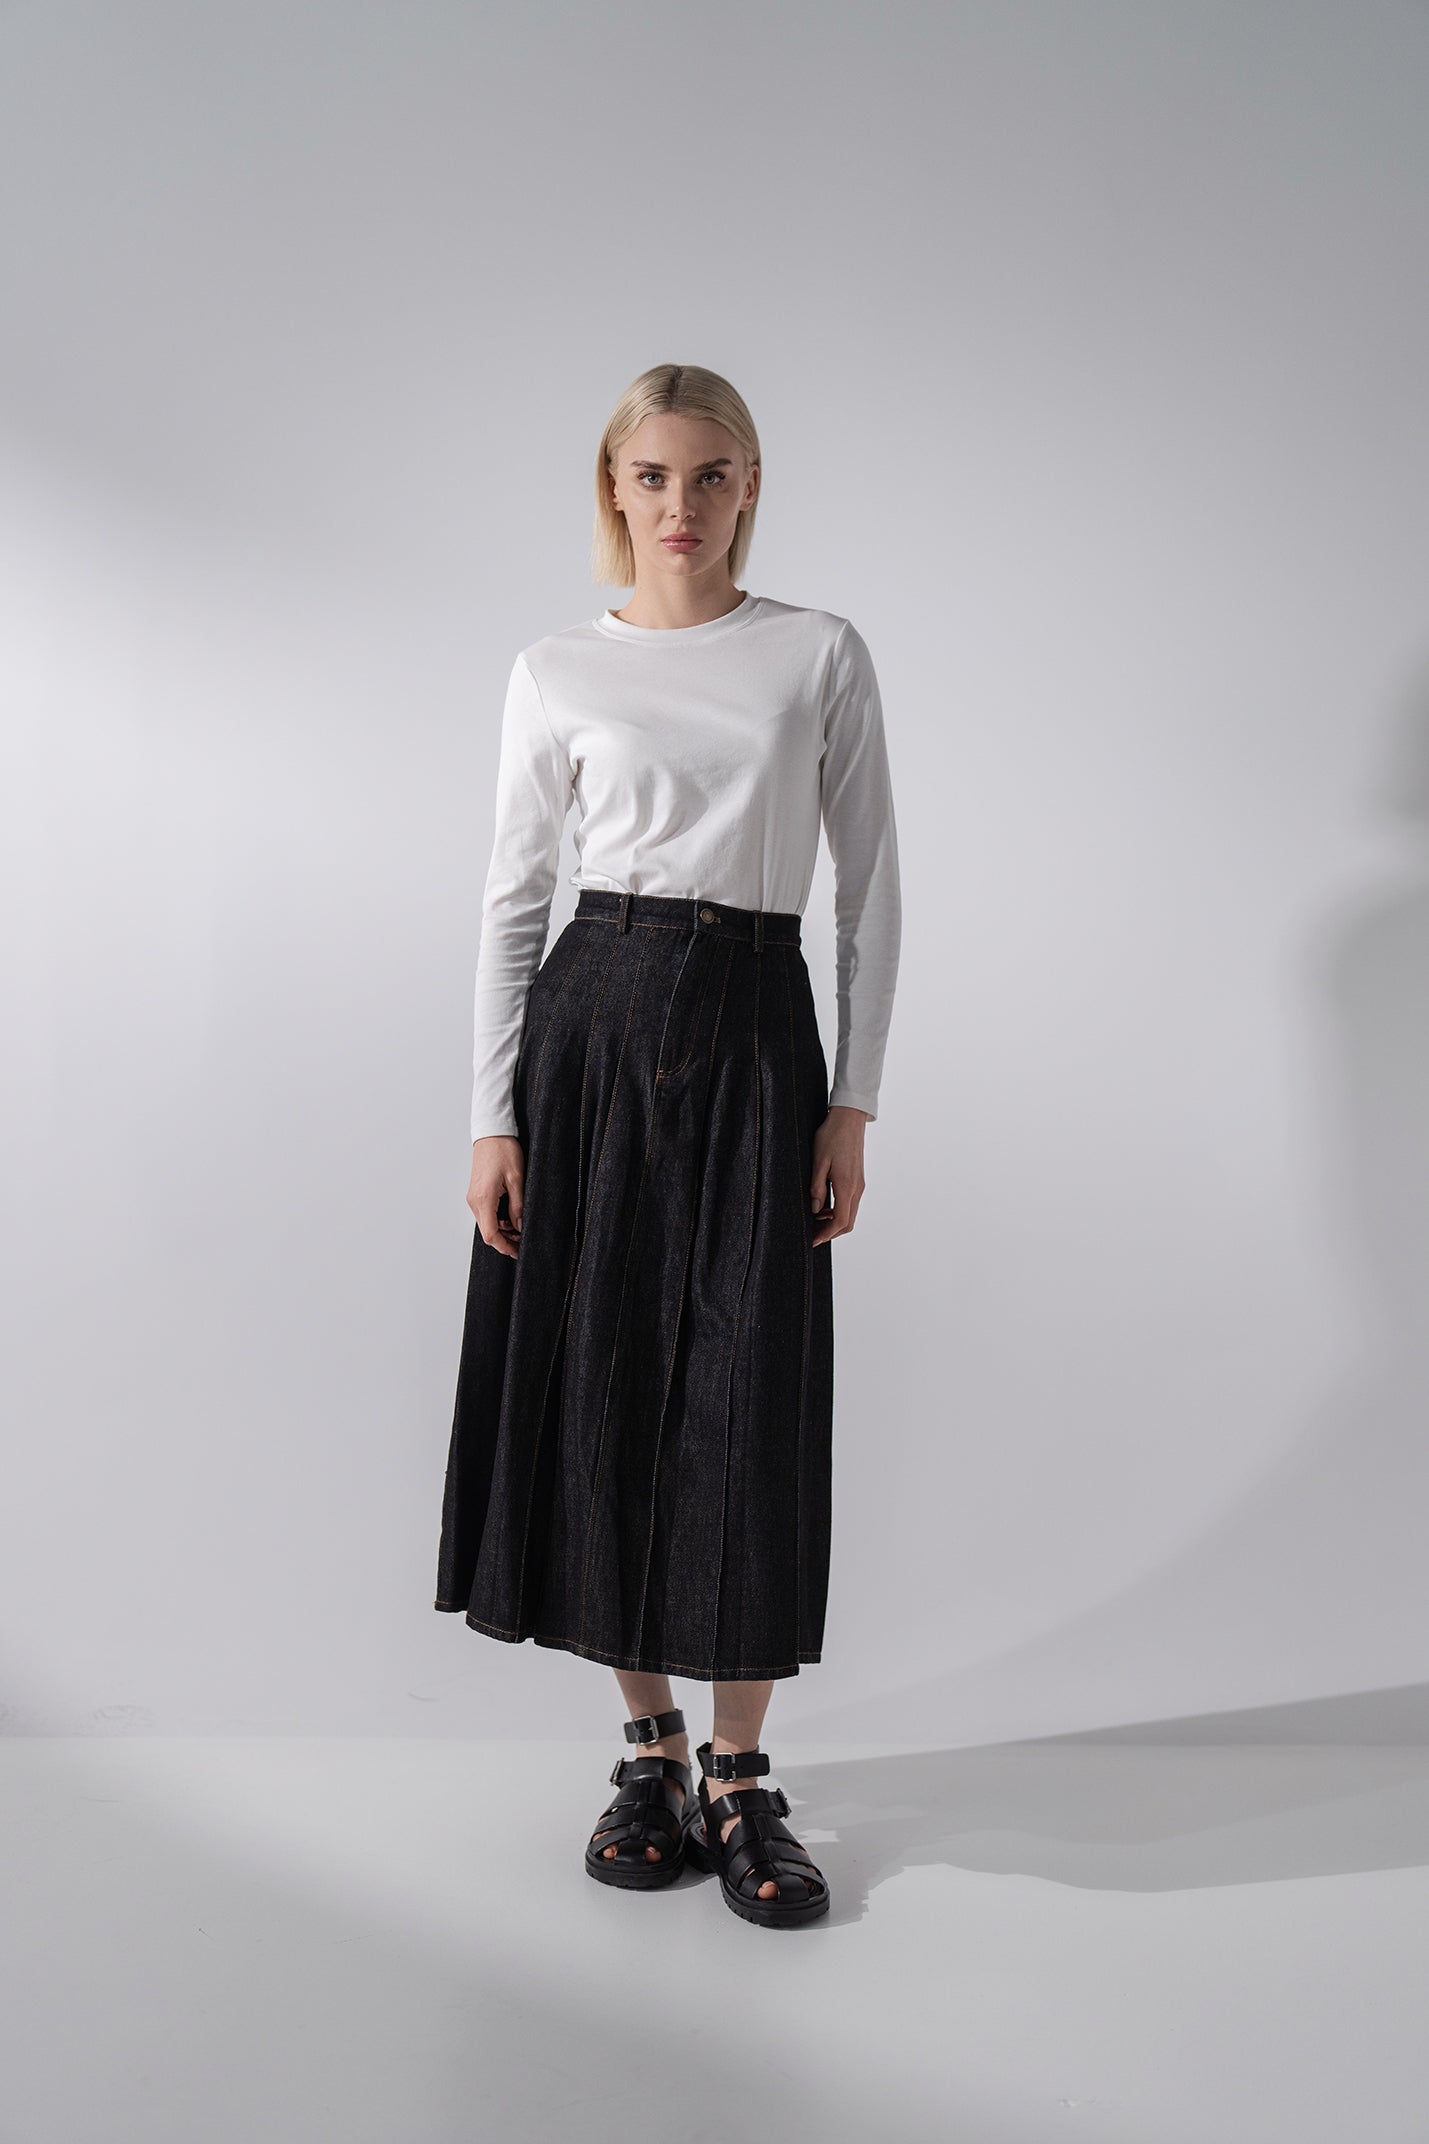 Stitched Pleated Skirt-Black